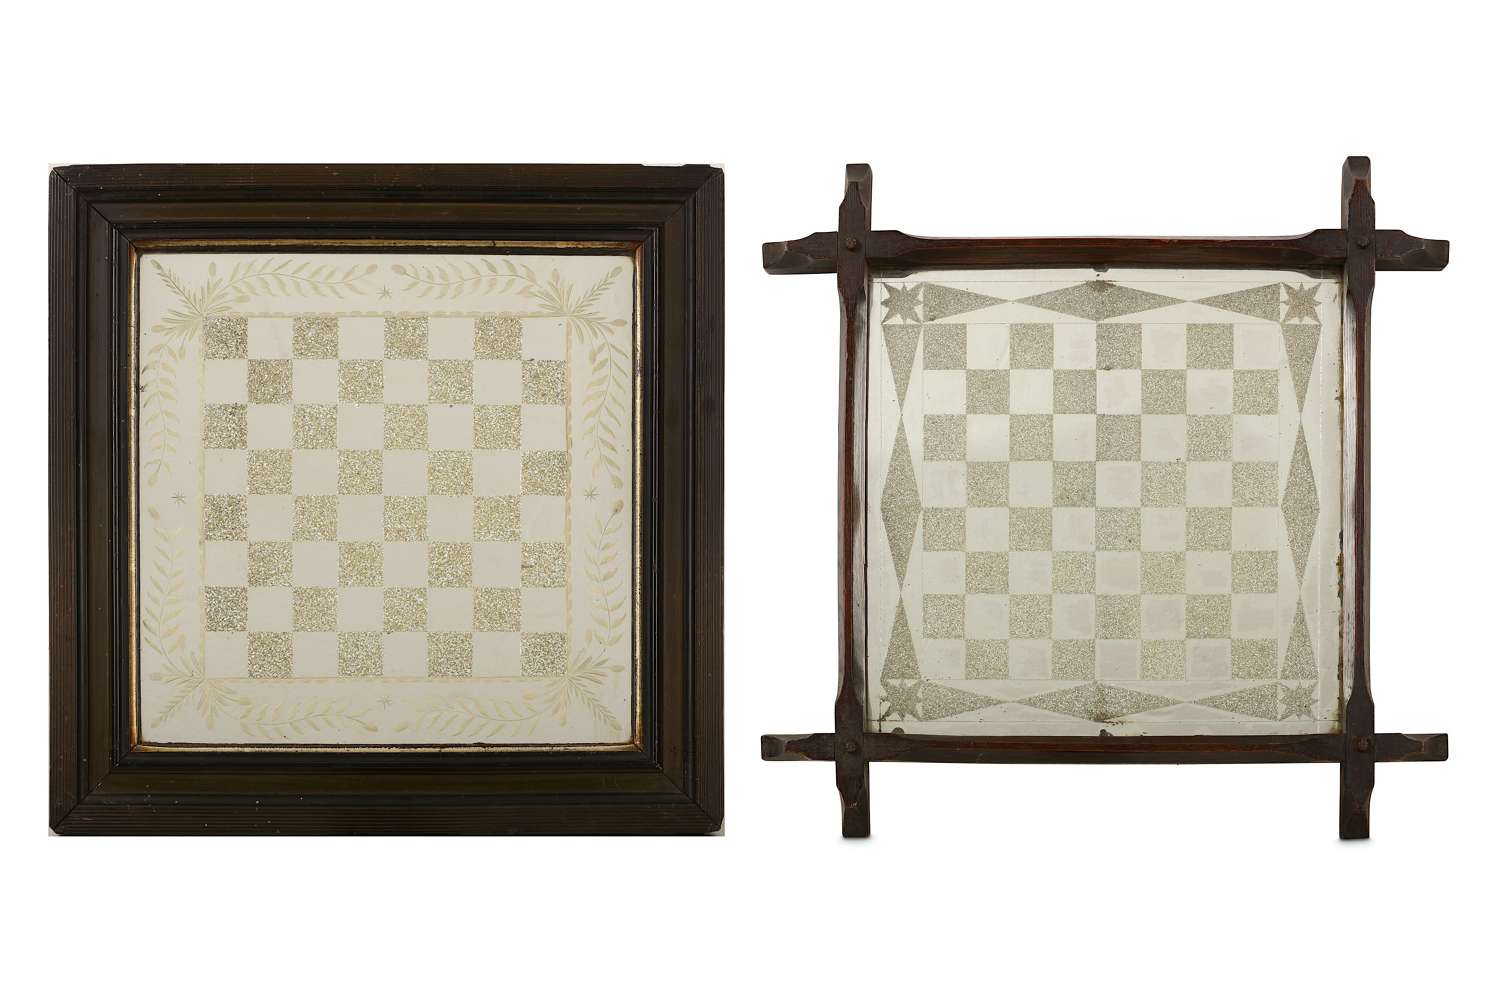 2x 19th century Mirrored Chess Boards